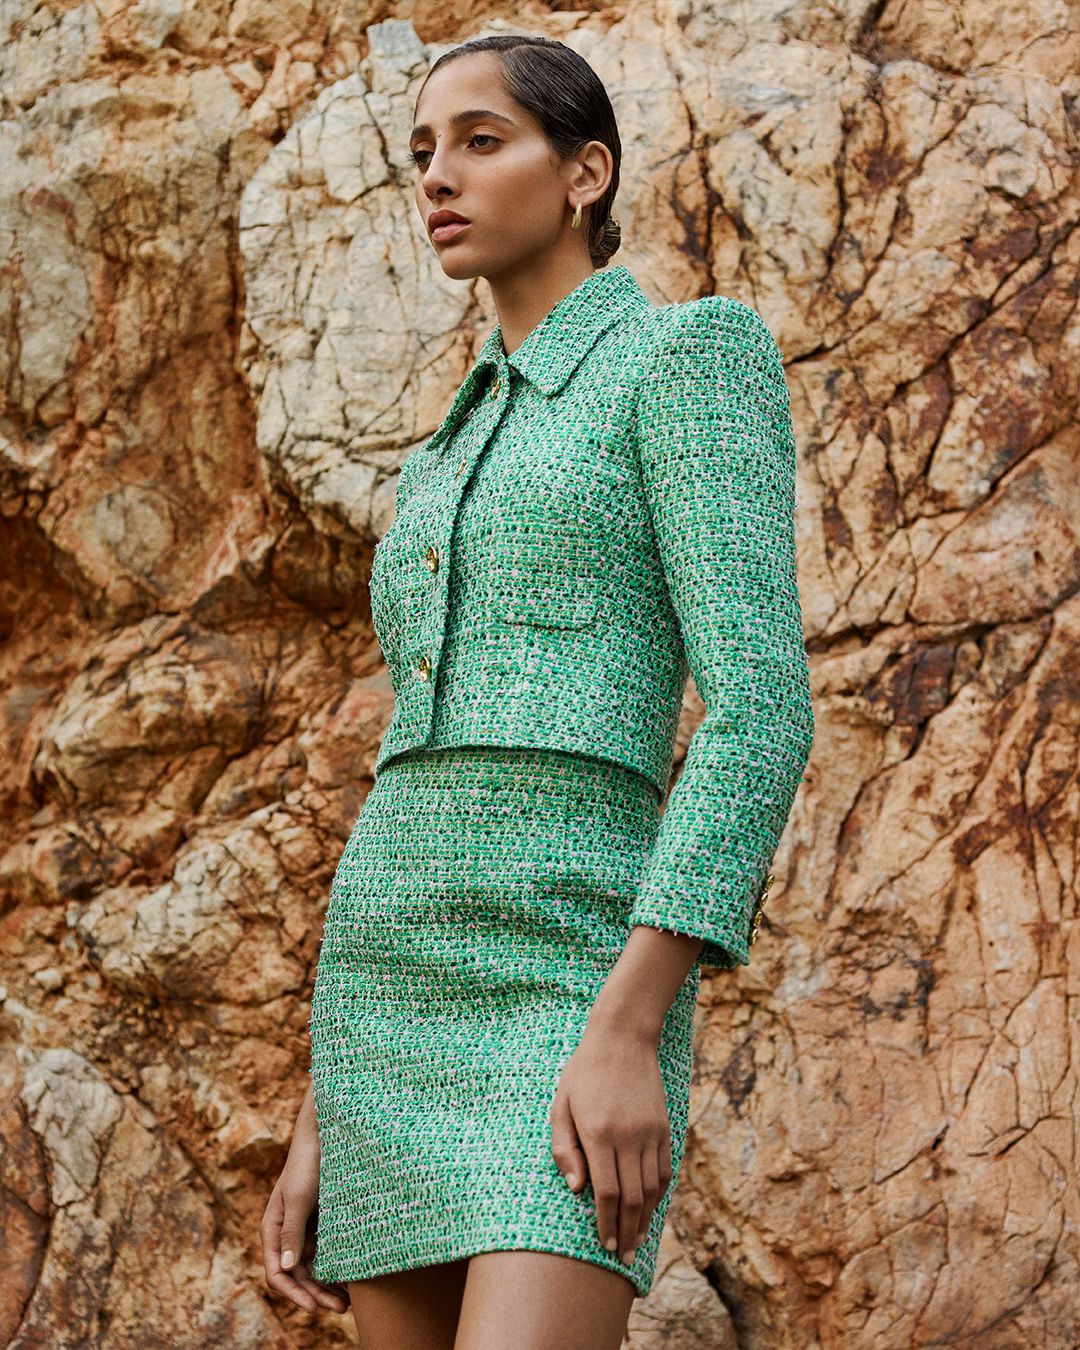 Yasmin Wijnaldum standing facing the side wearing a matching green tweed jacket and mini skirt